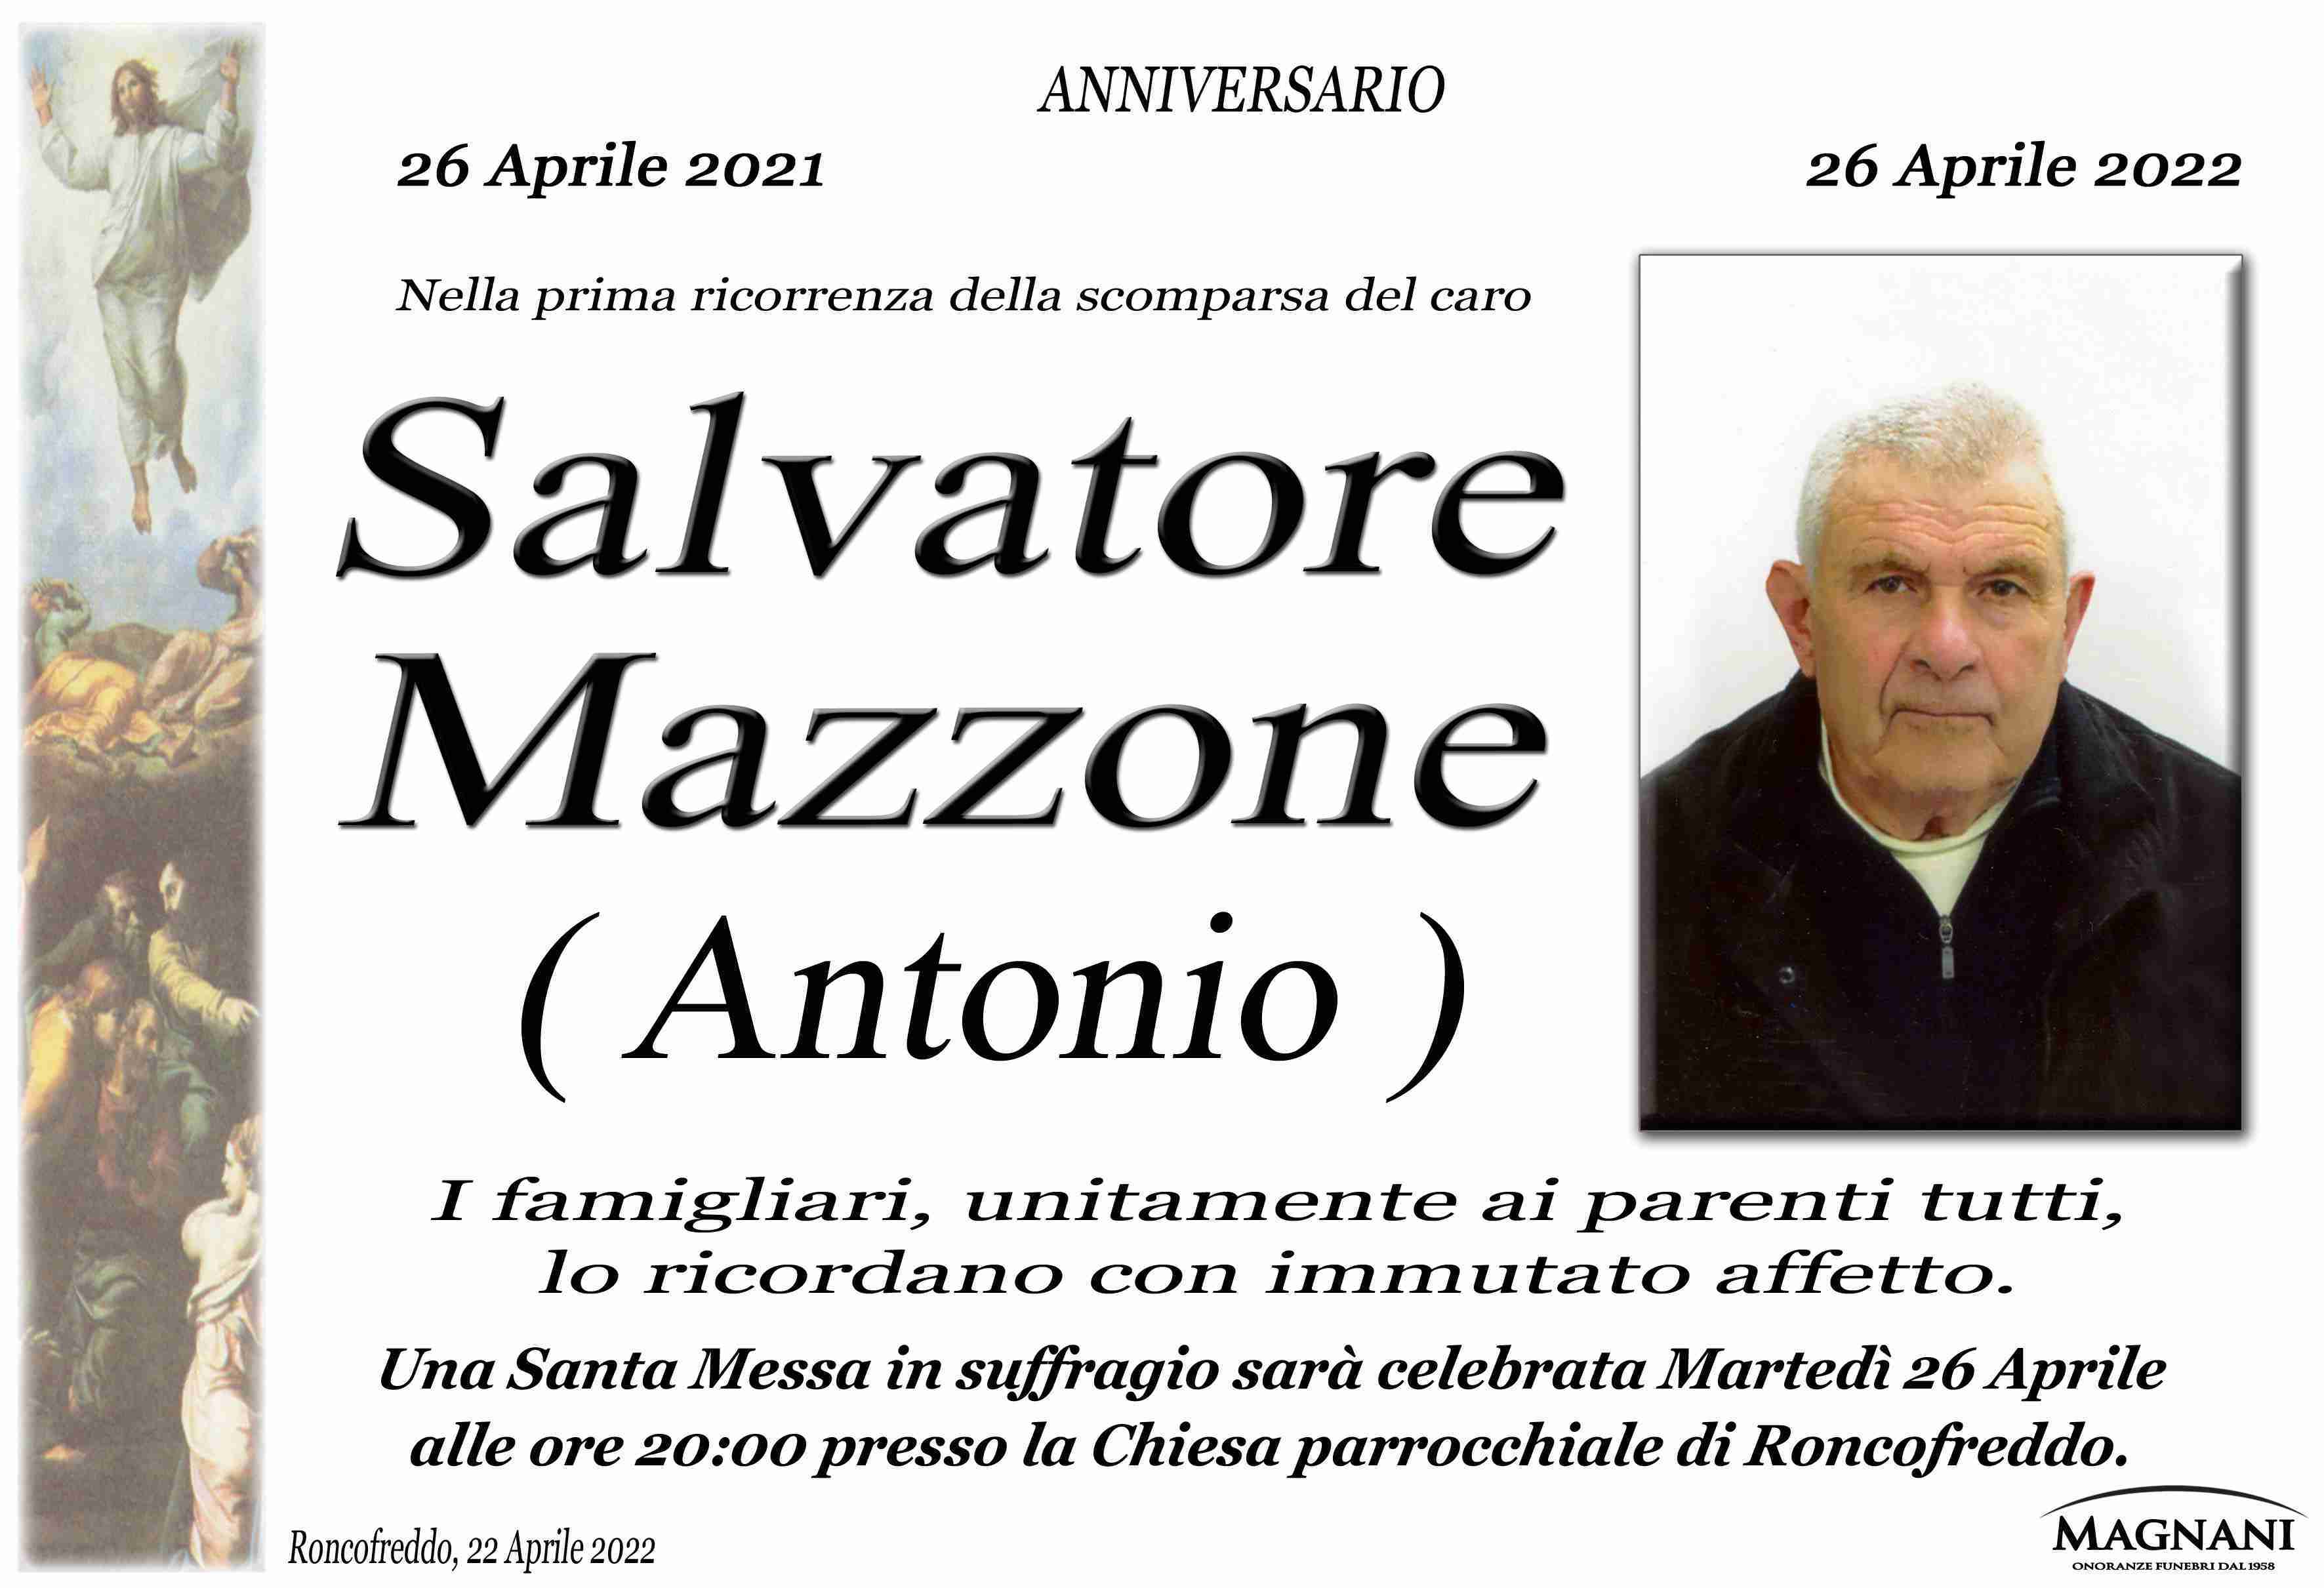 Salvatore Mazzone